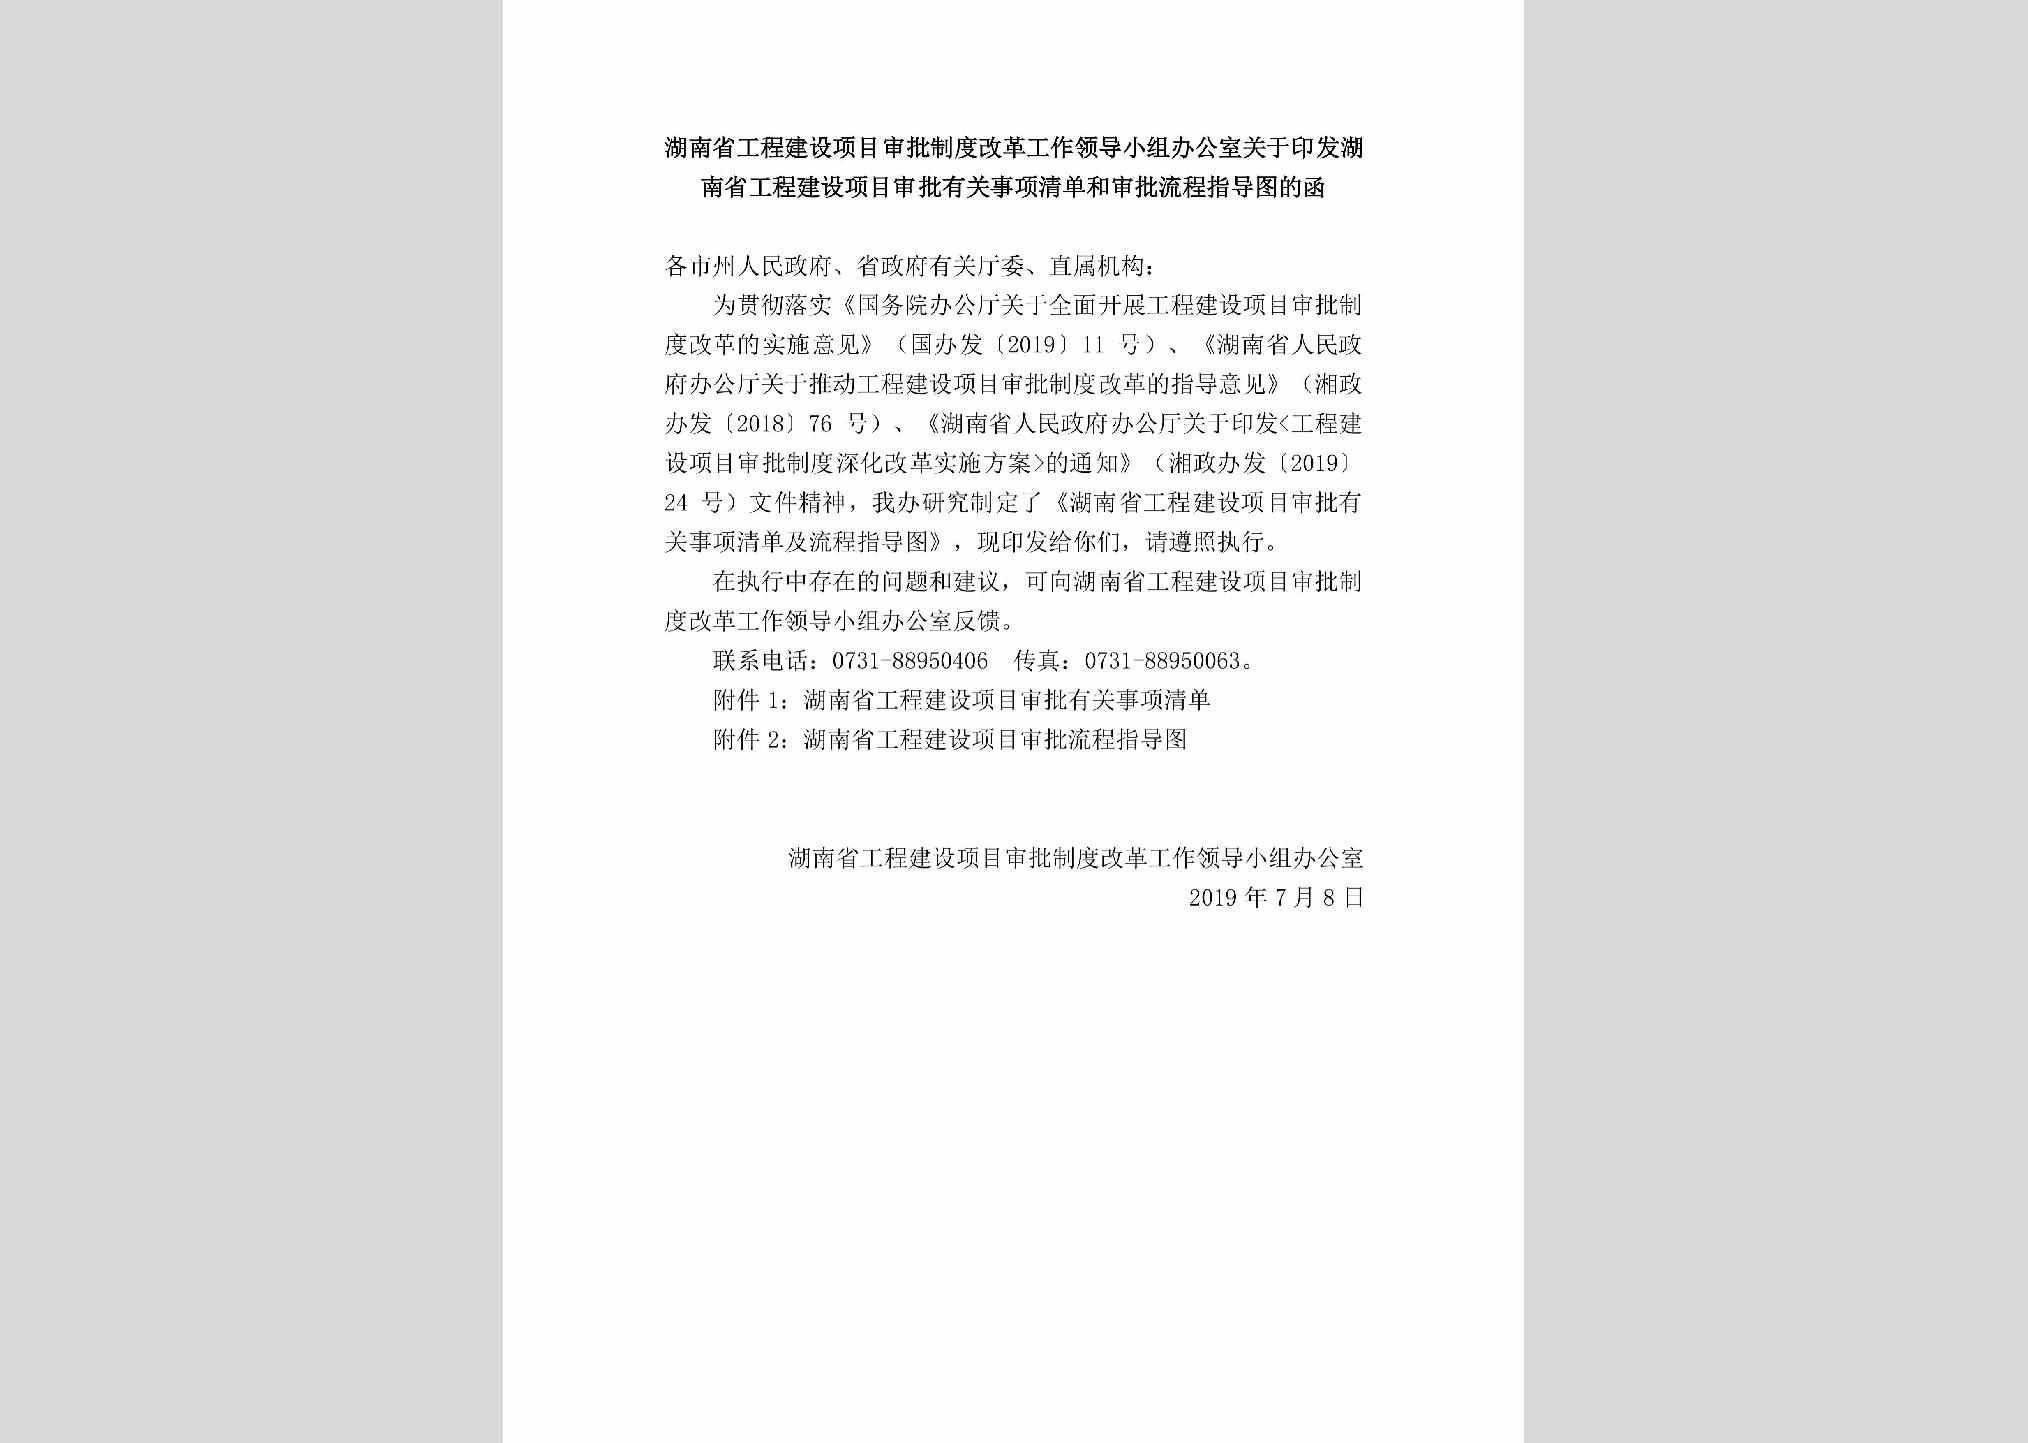 HUN-GCJSXMSP-2019：关于印发湖南省工程建设项目审批有关事项清单和审批流程指导图的函